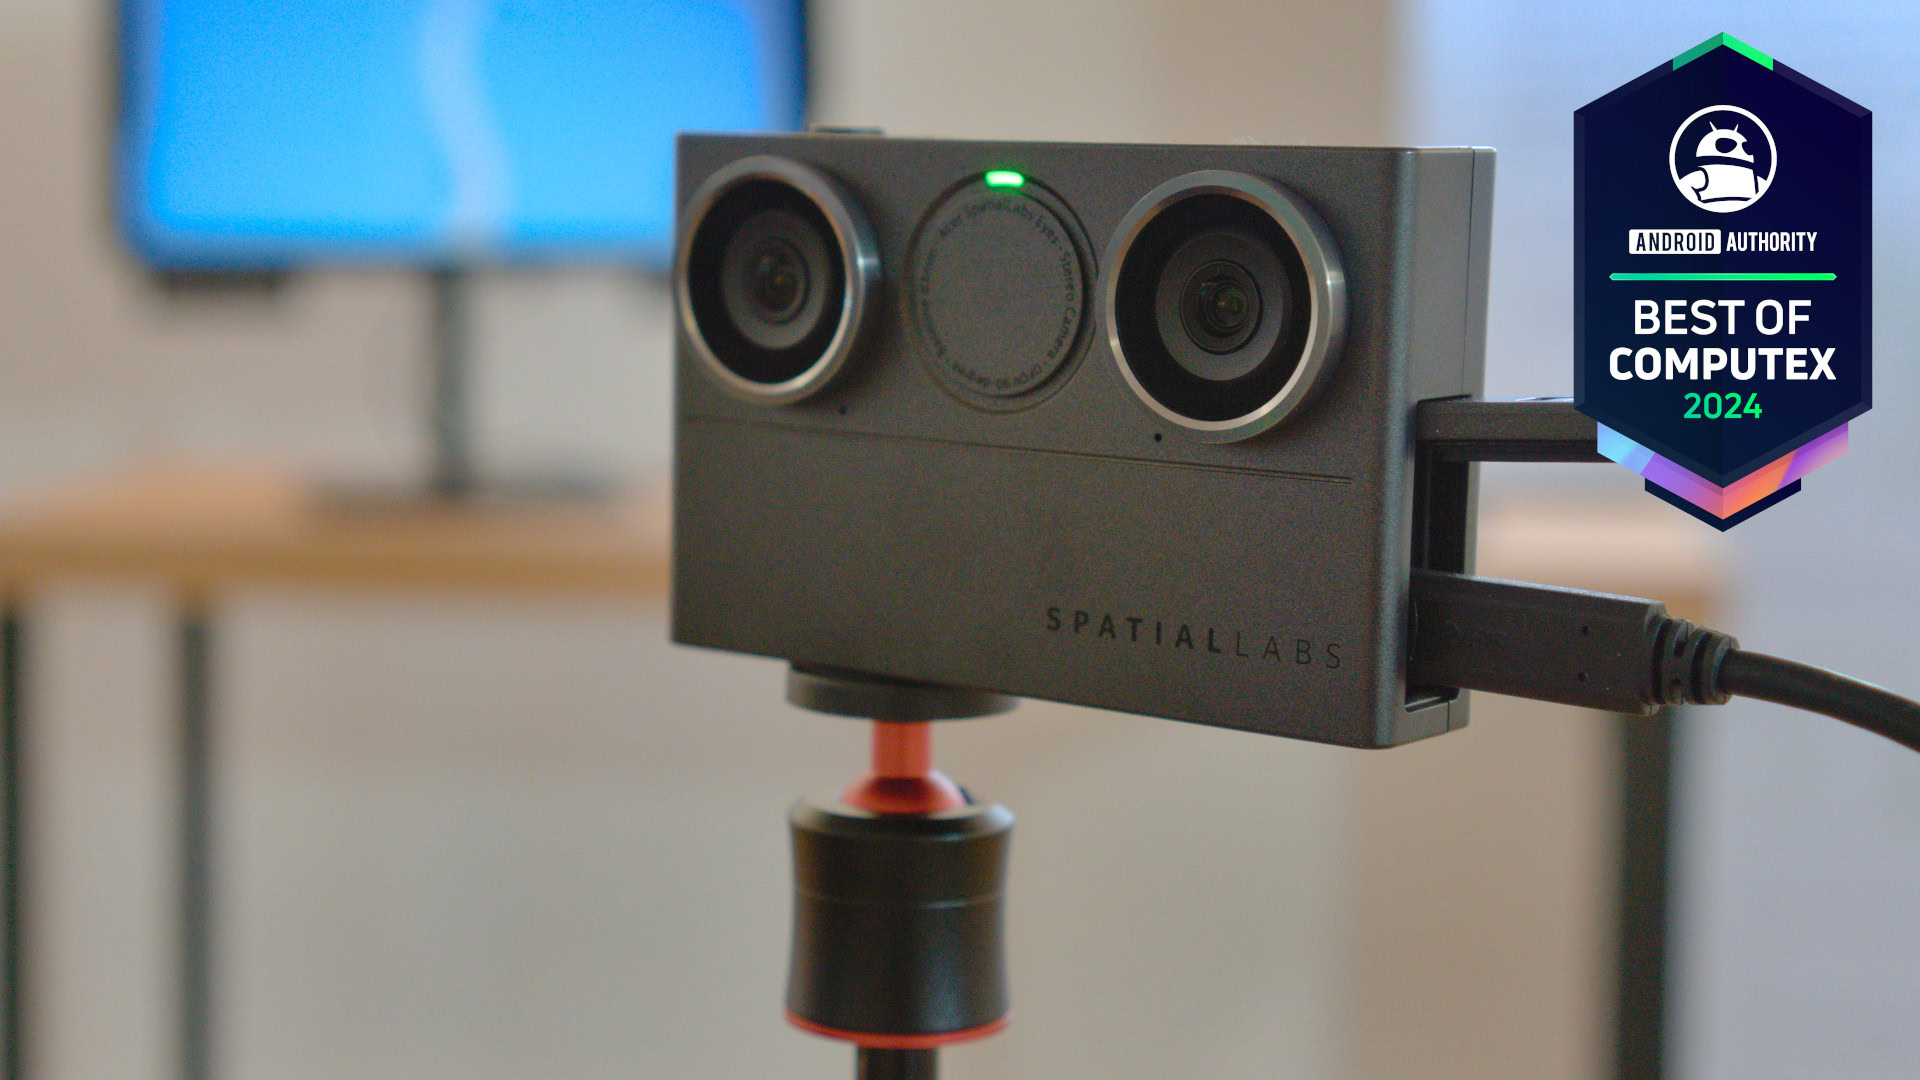 Acer's SpatialLabs StereoSense Camera.